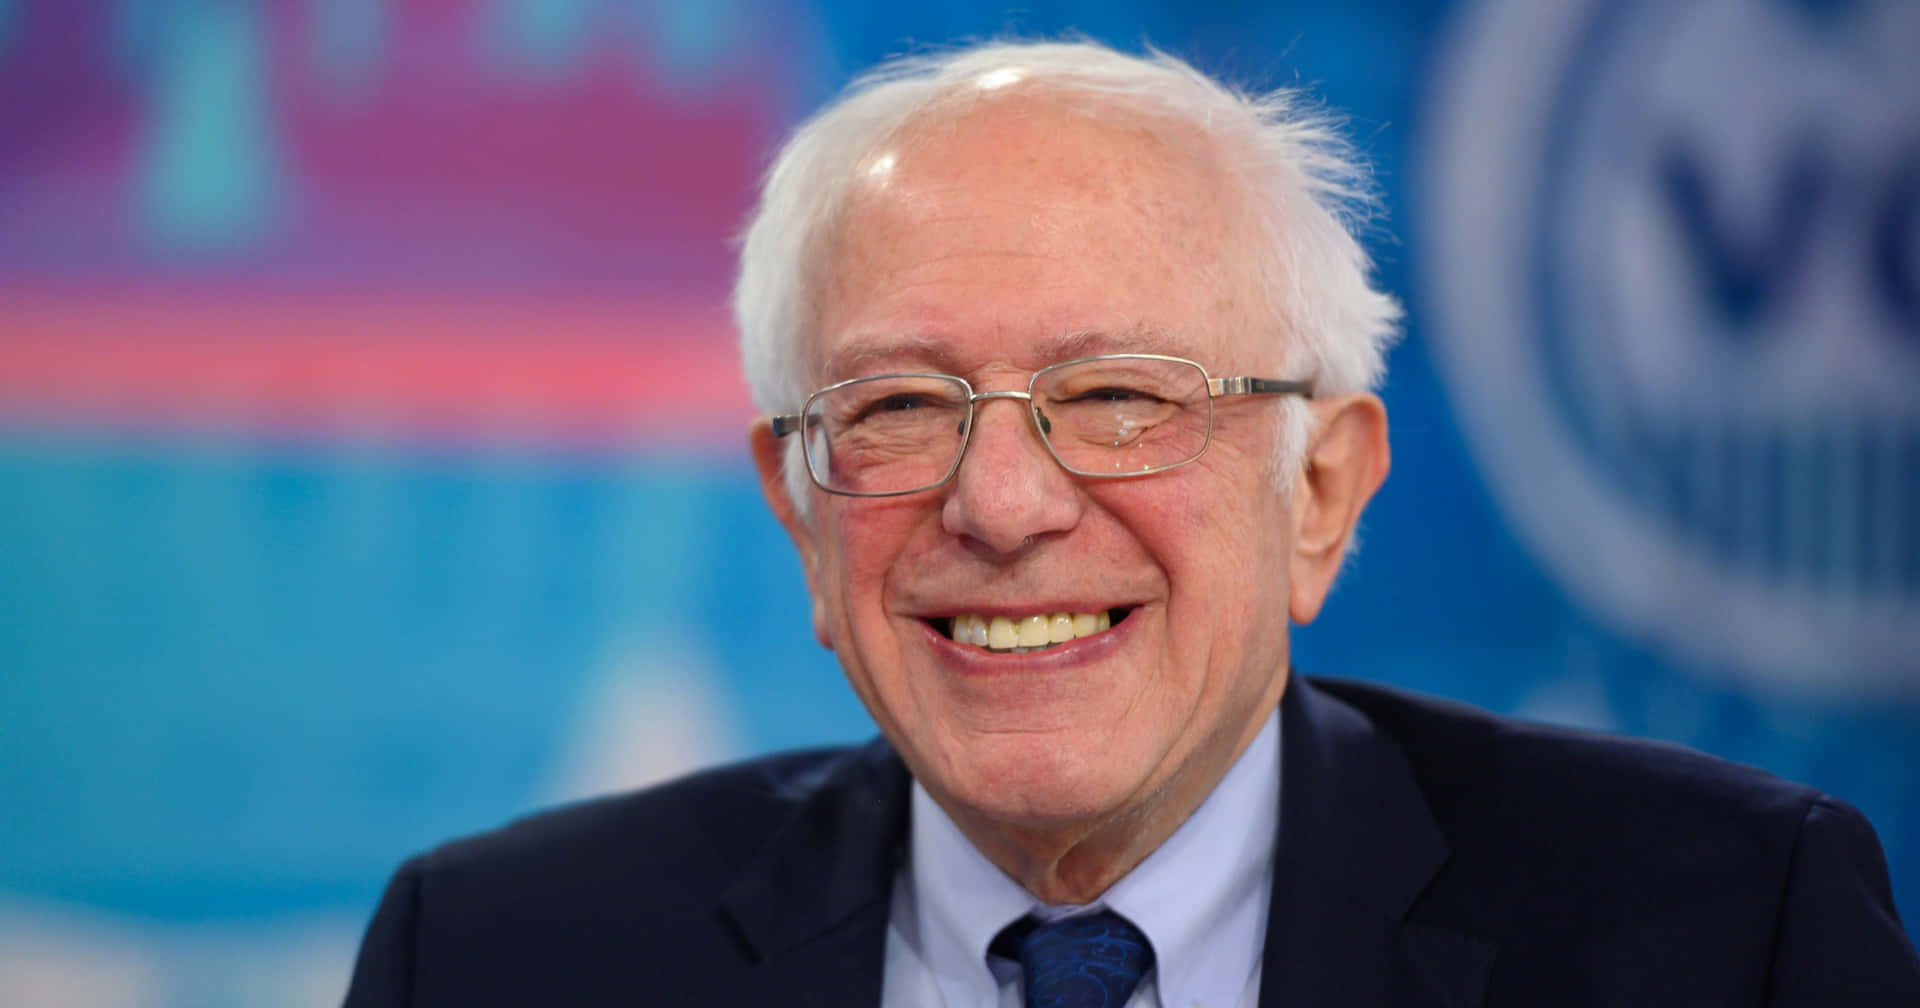 Bernie Sanders Smiling Portrait Wallpaper